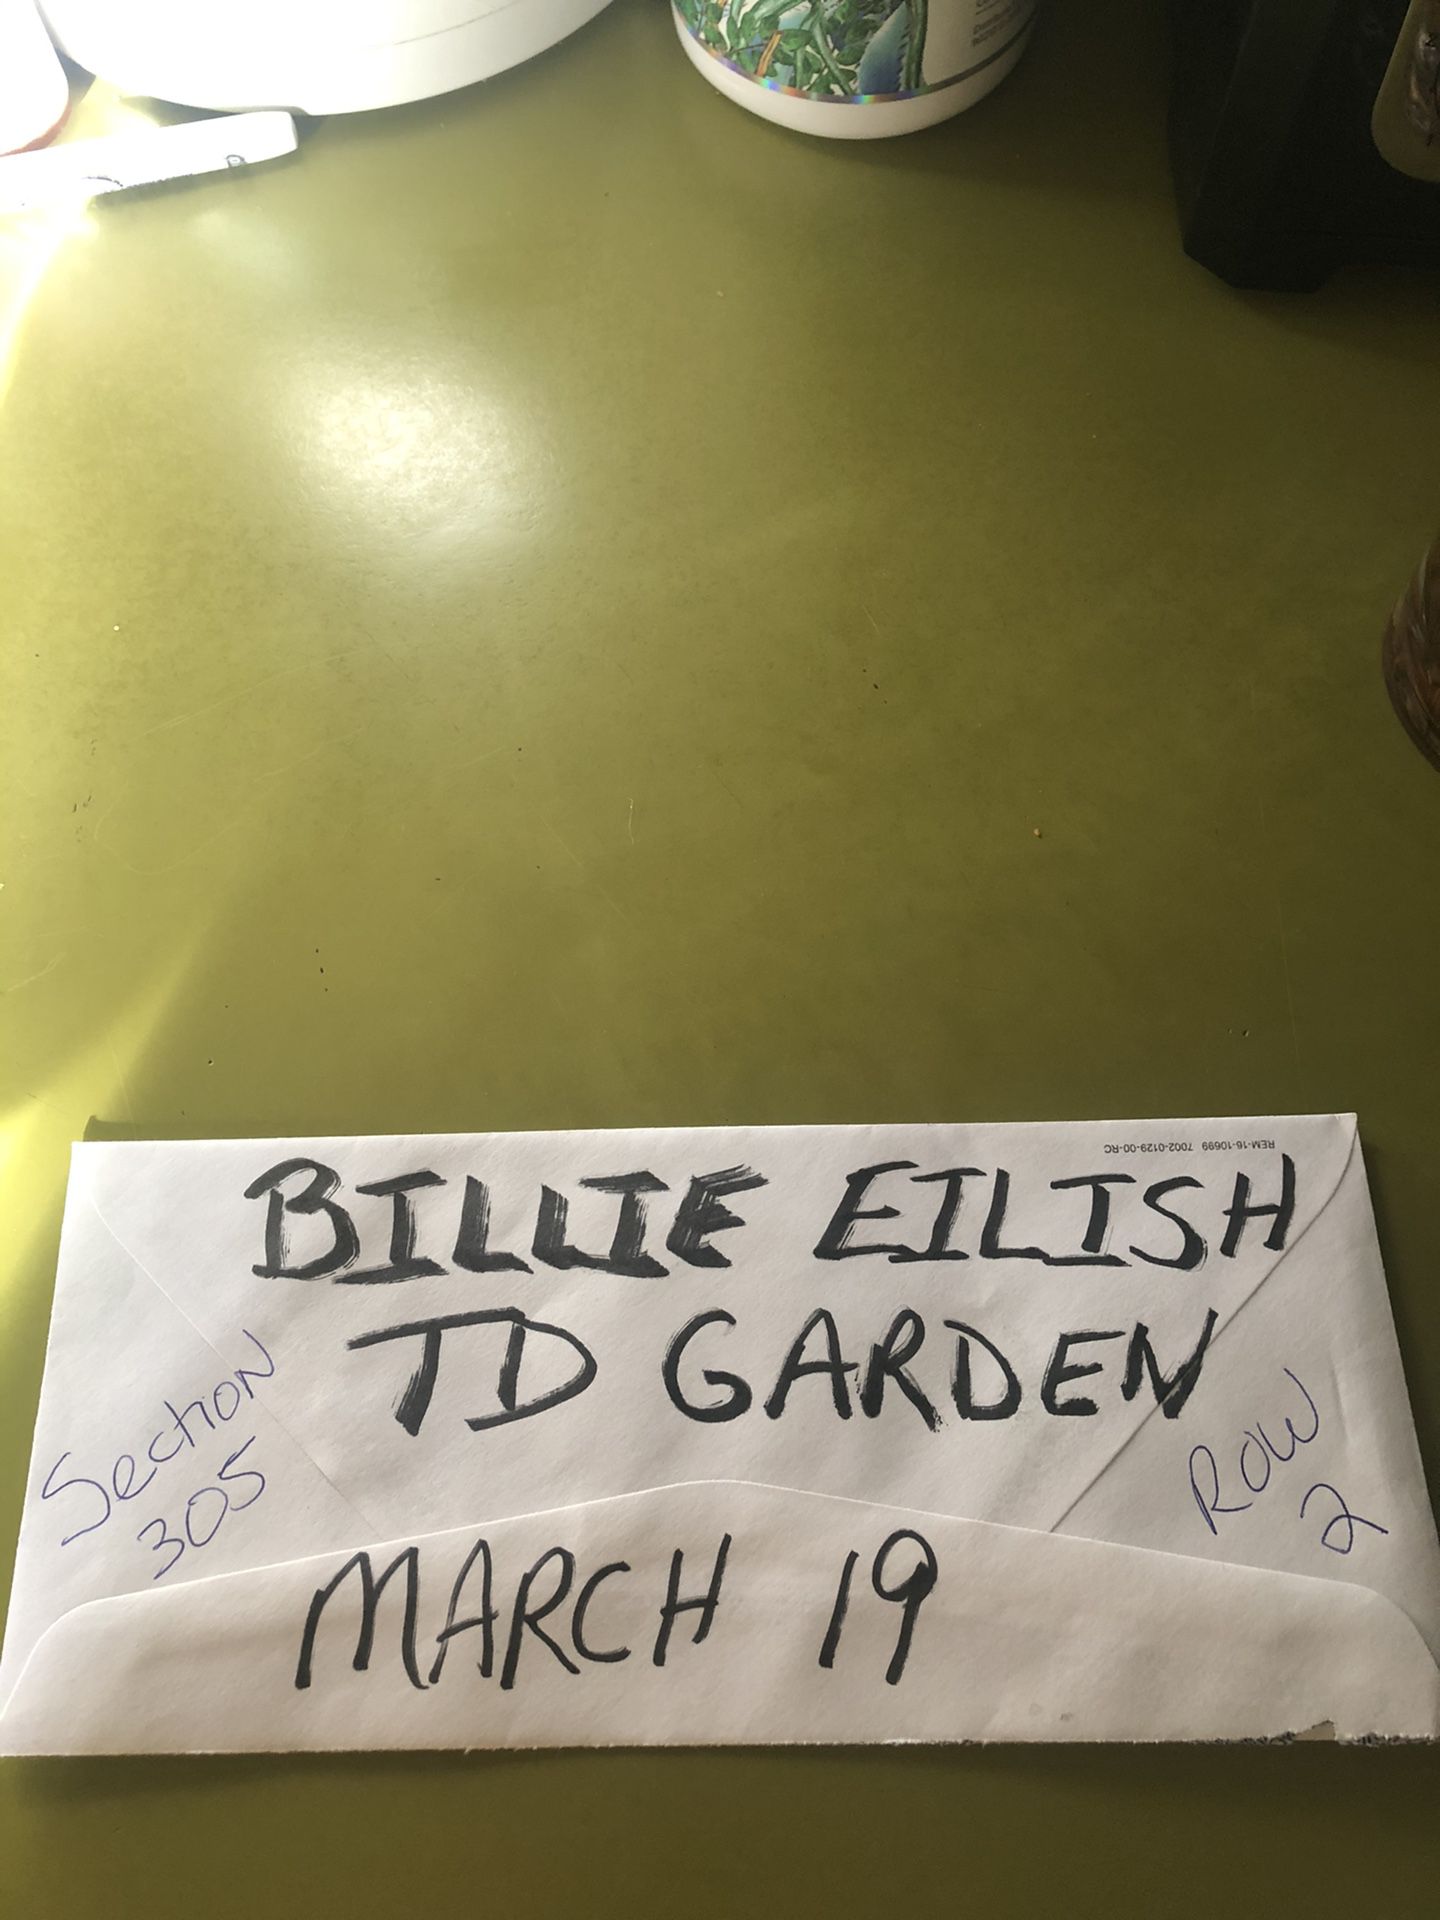 Billie EILISH